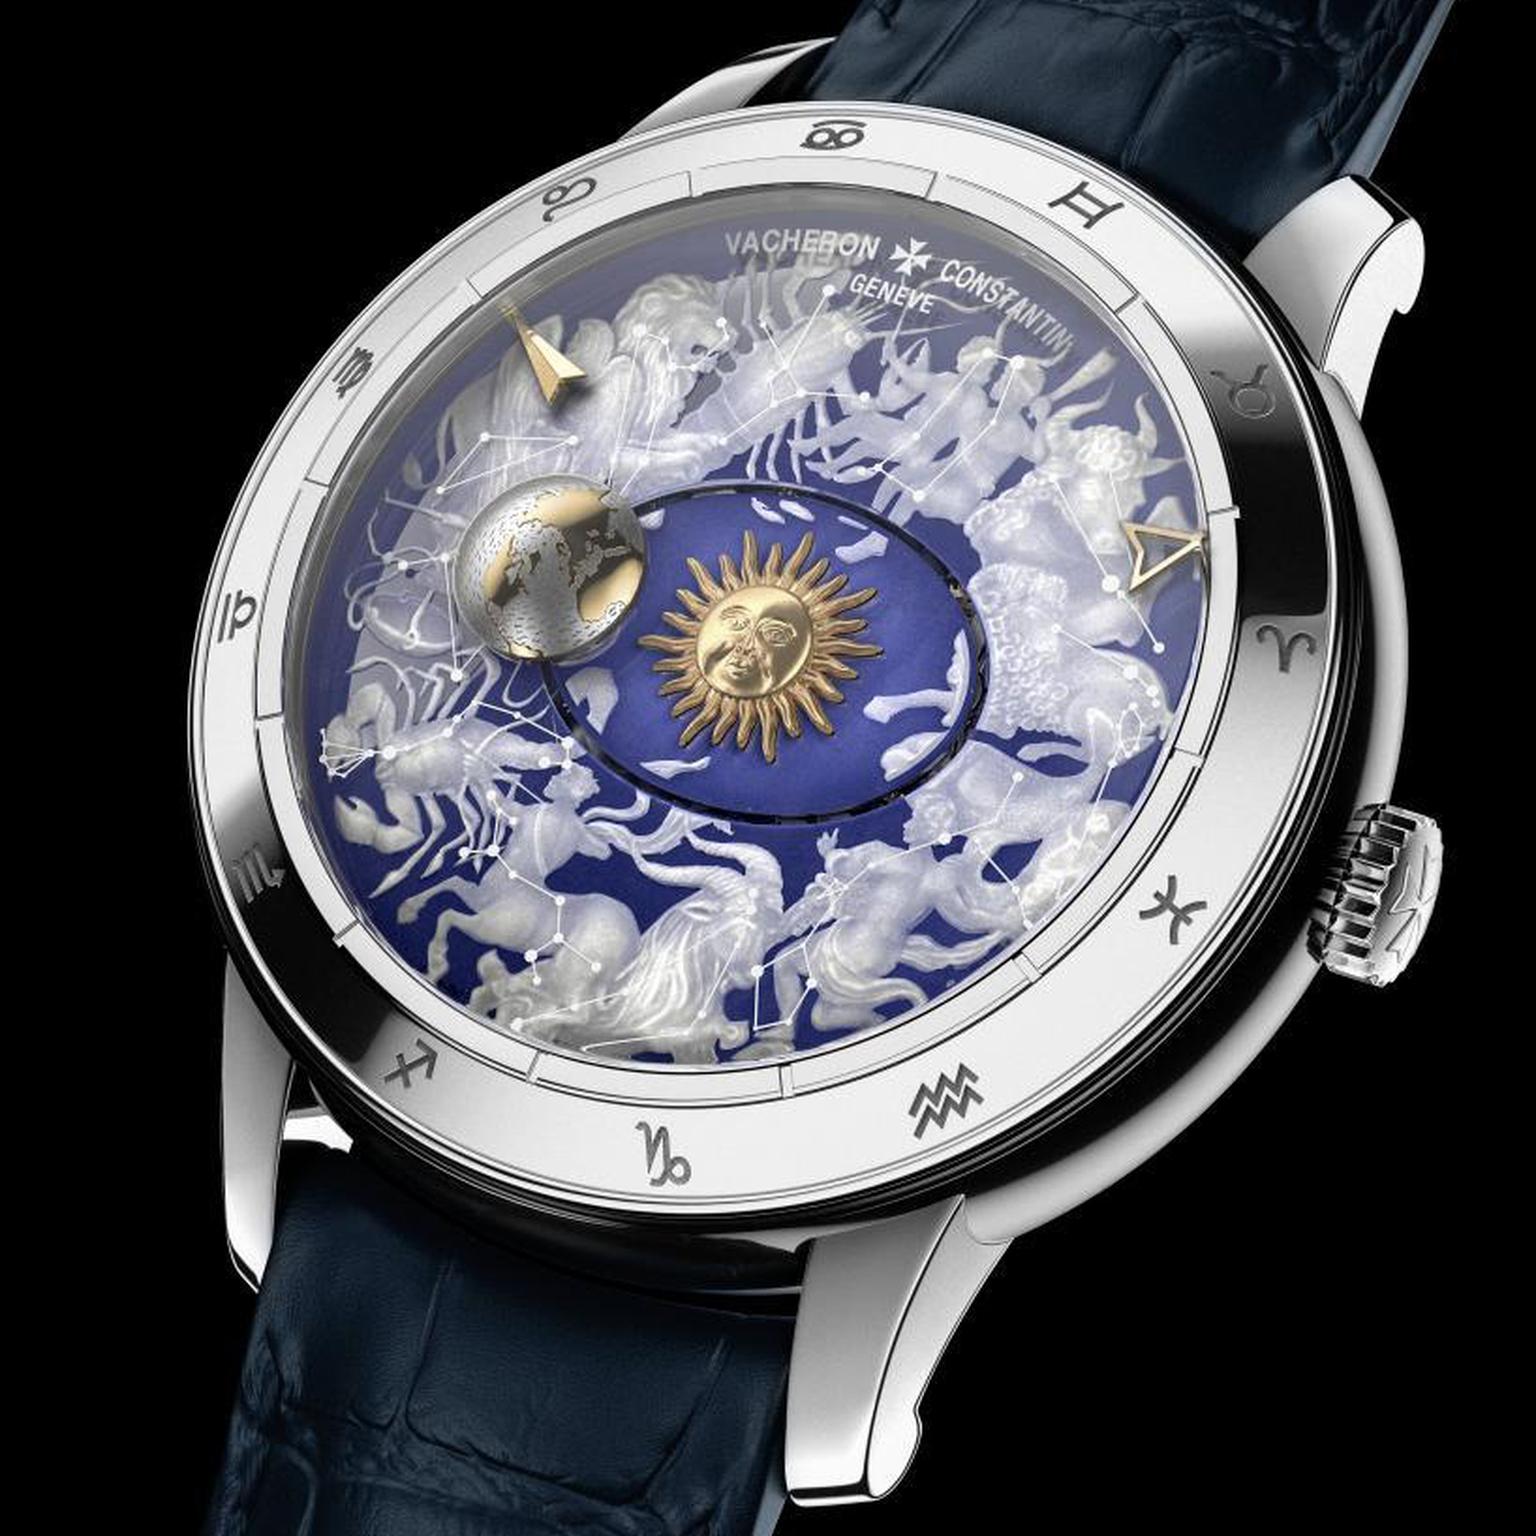 Vacheron Constantin Copernicus watch